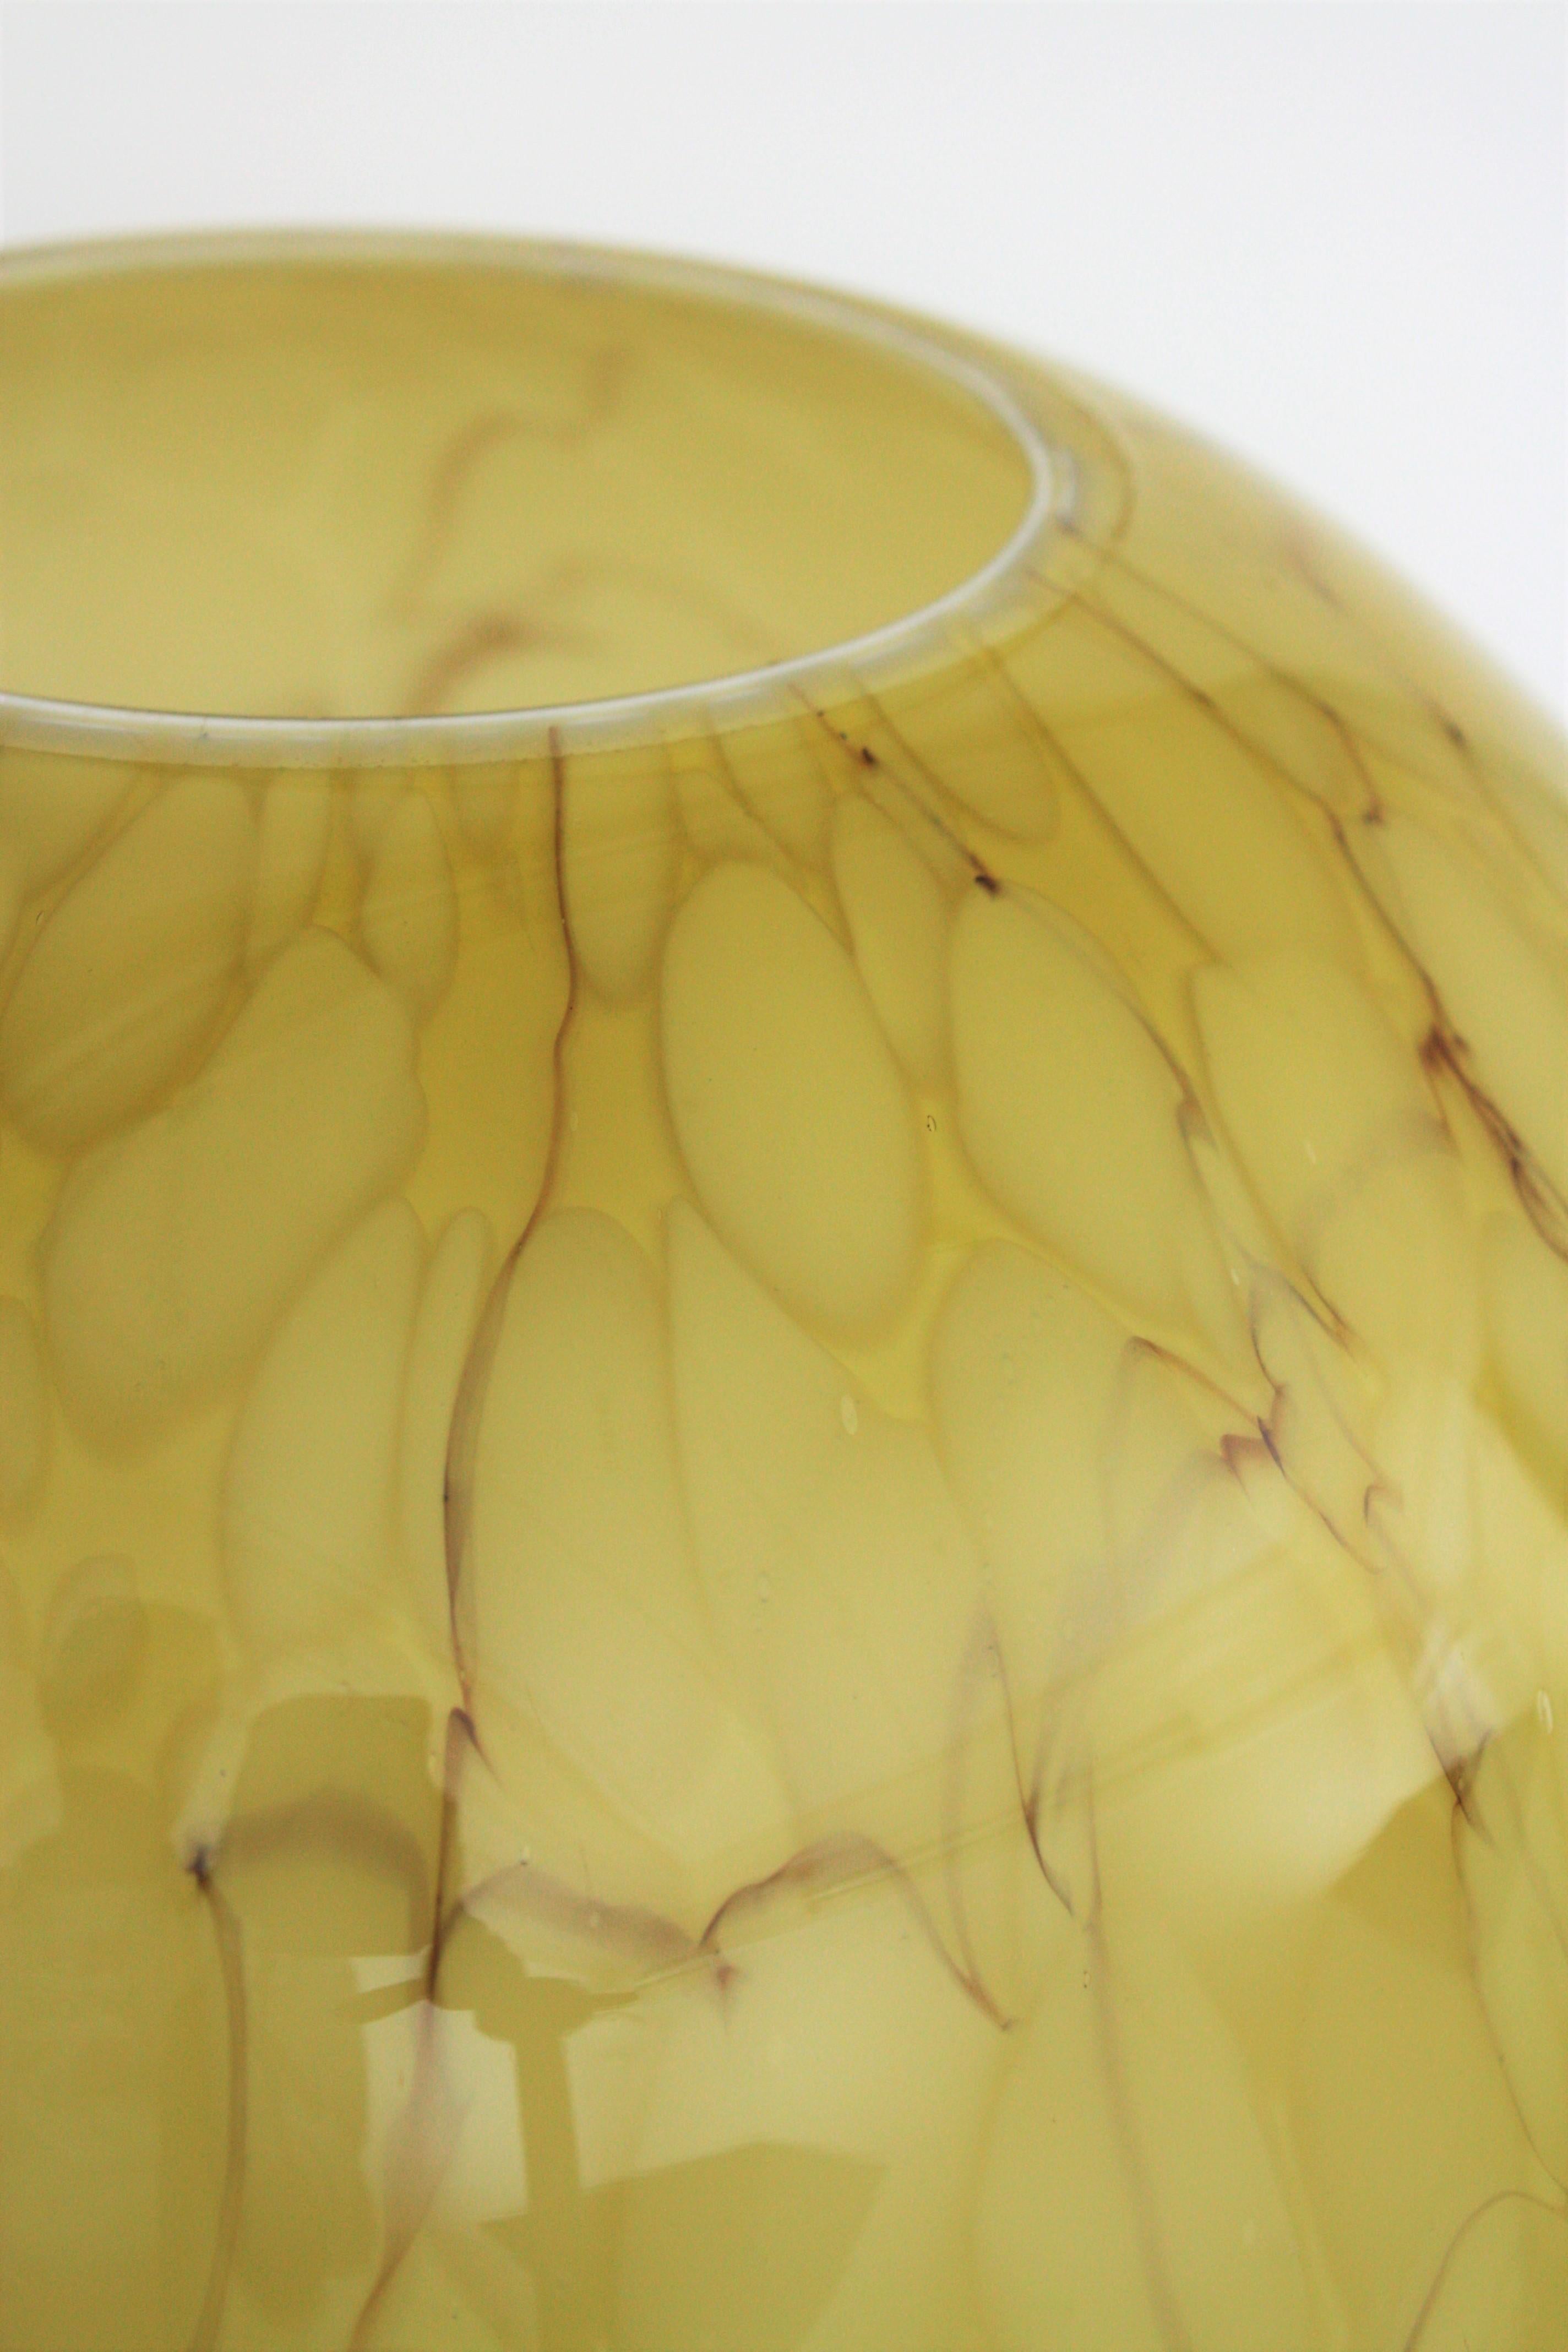 Fratelli Toso Venini Murano Murrina Lattimo Yellow Glass Ball Centerpiece Vase 4